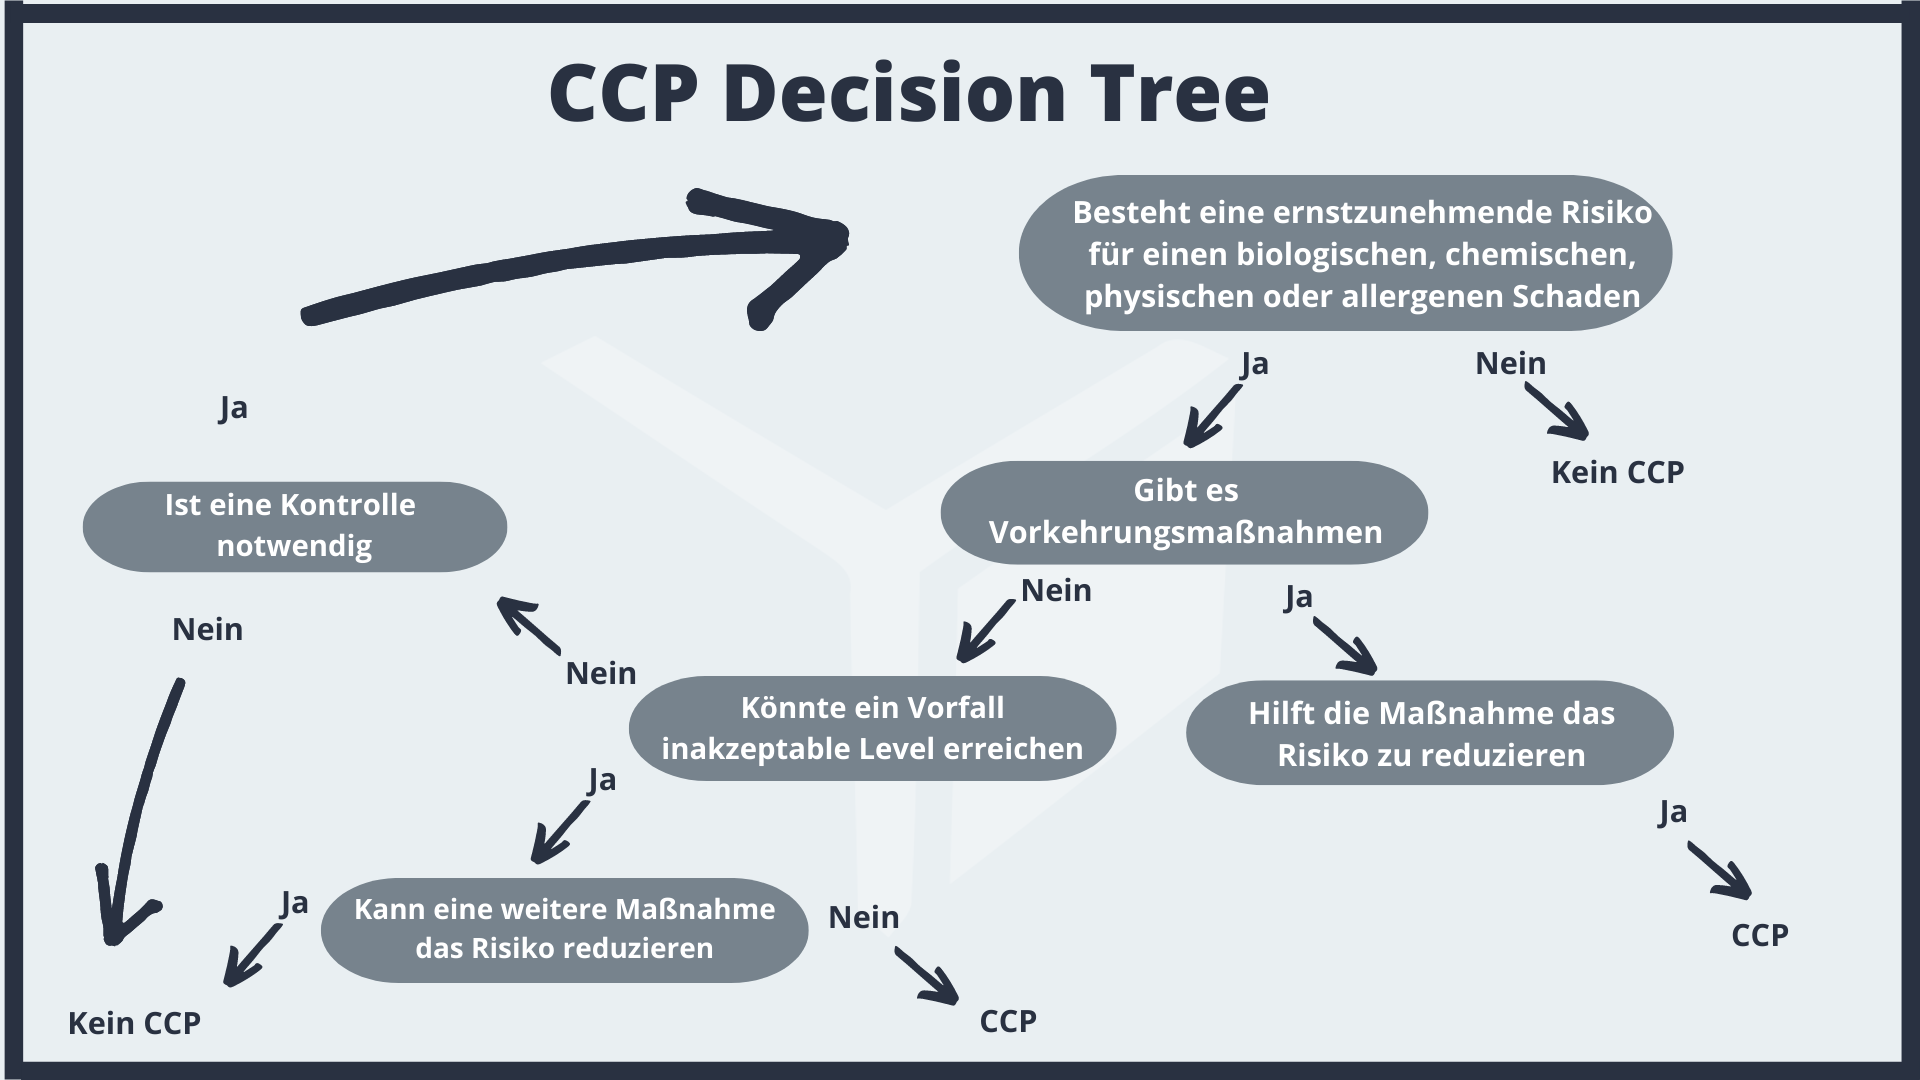 CCP decision tree